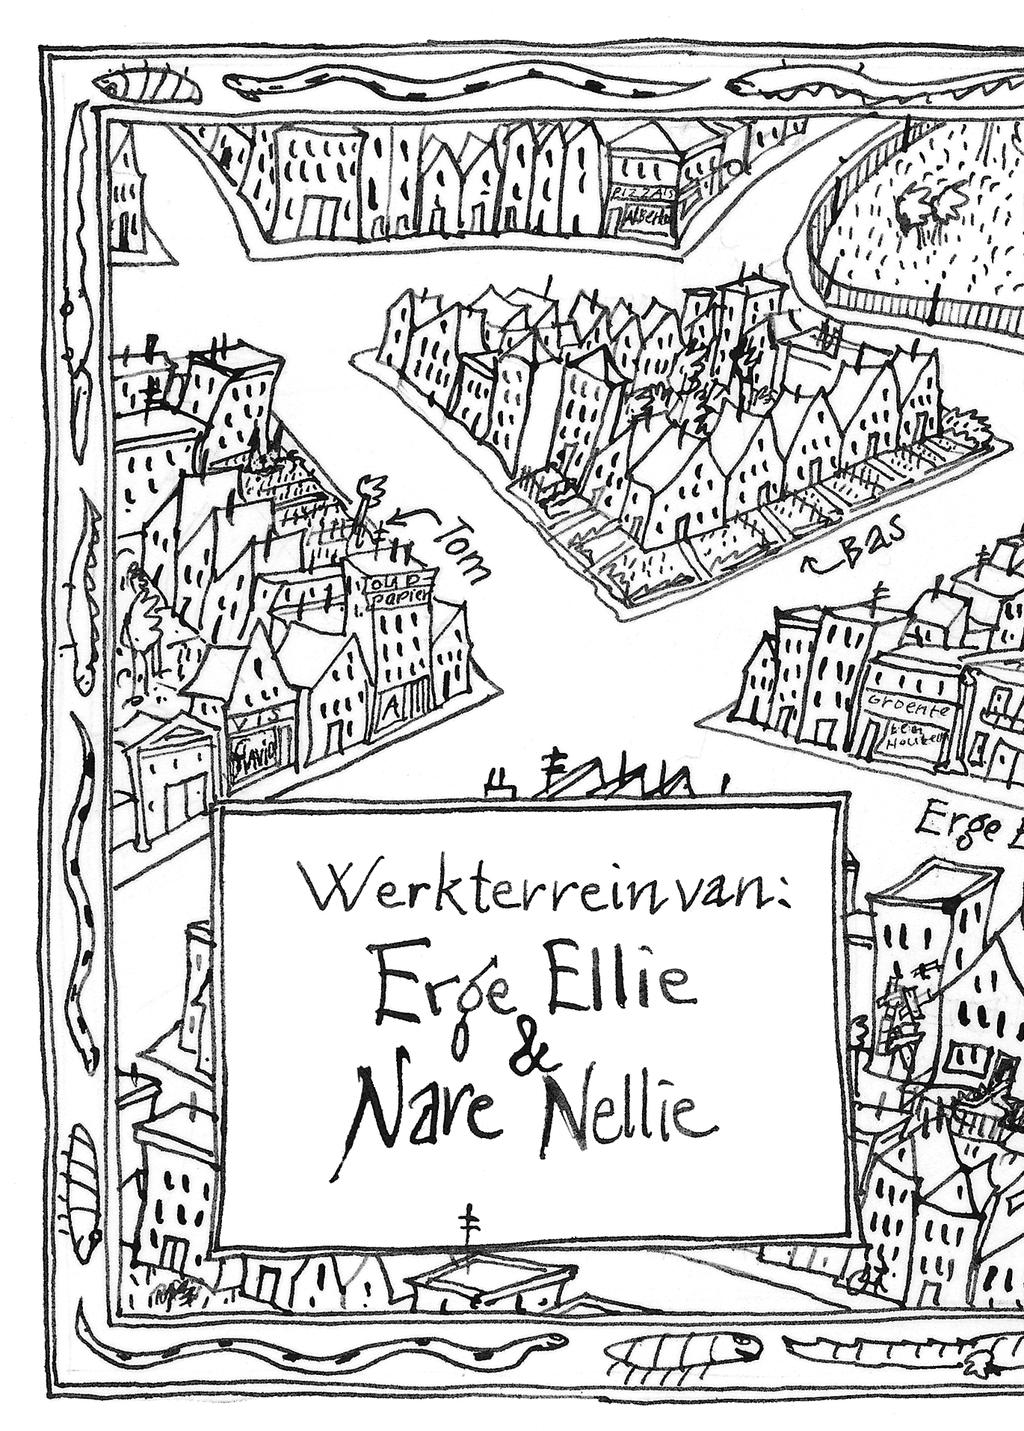 Erge Ellie & nare Nellie.